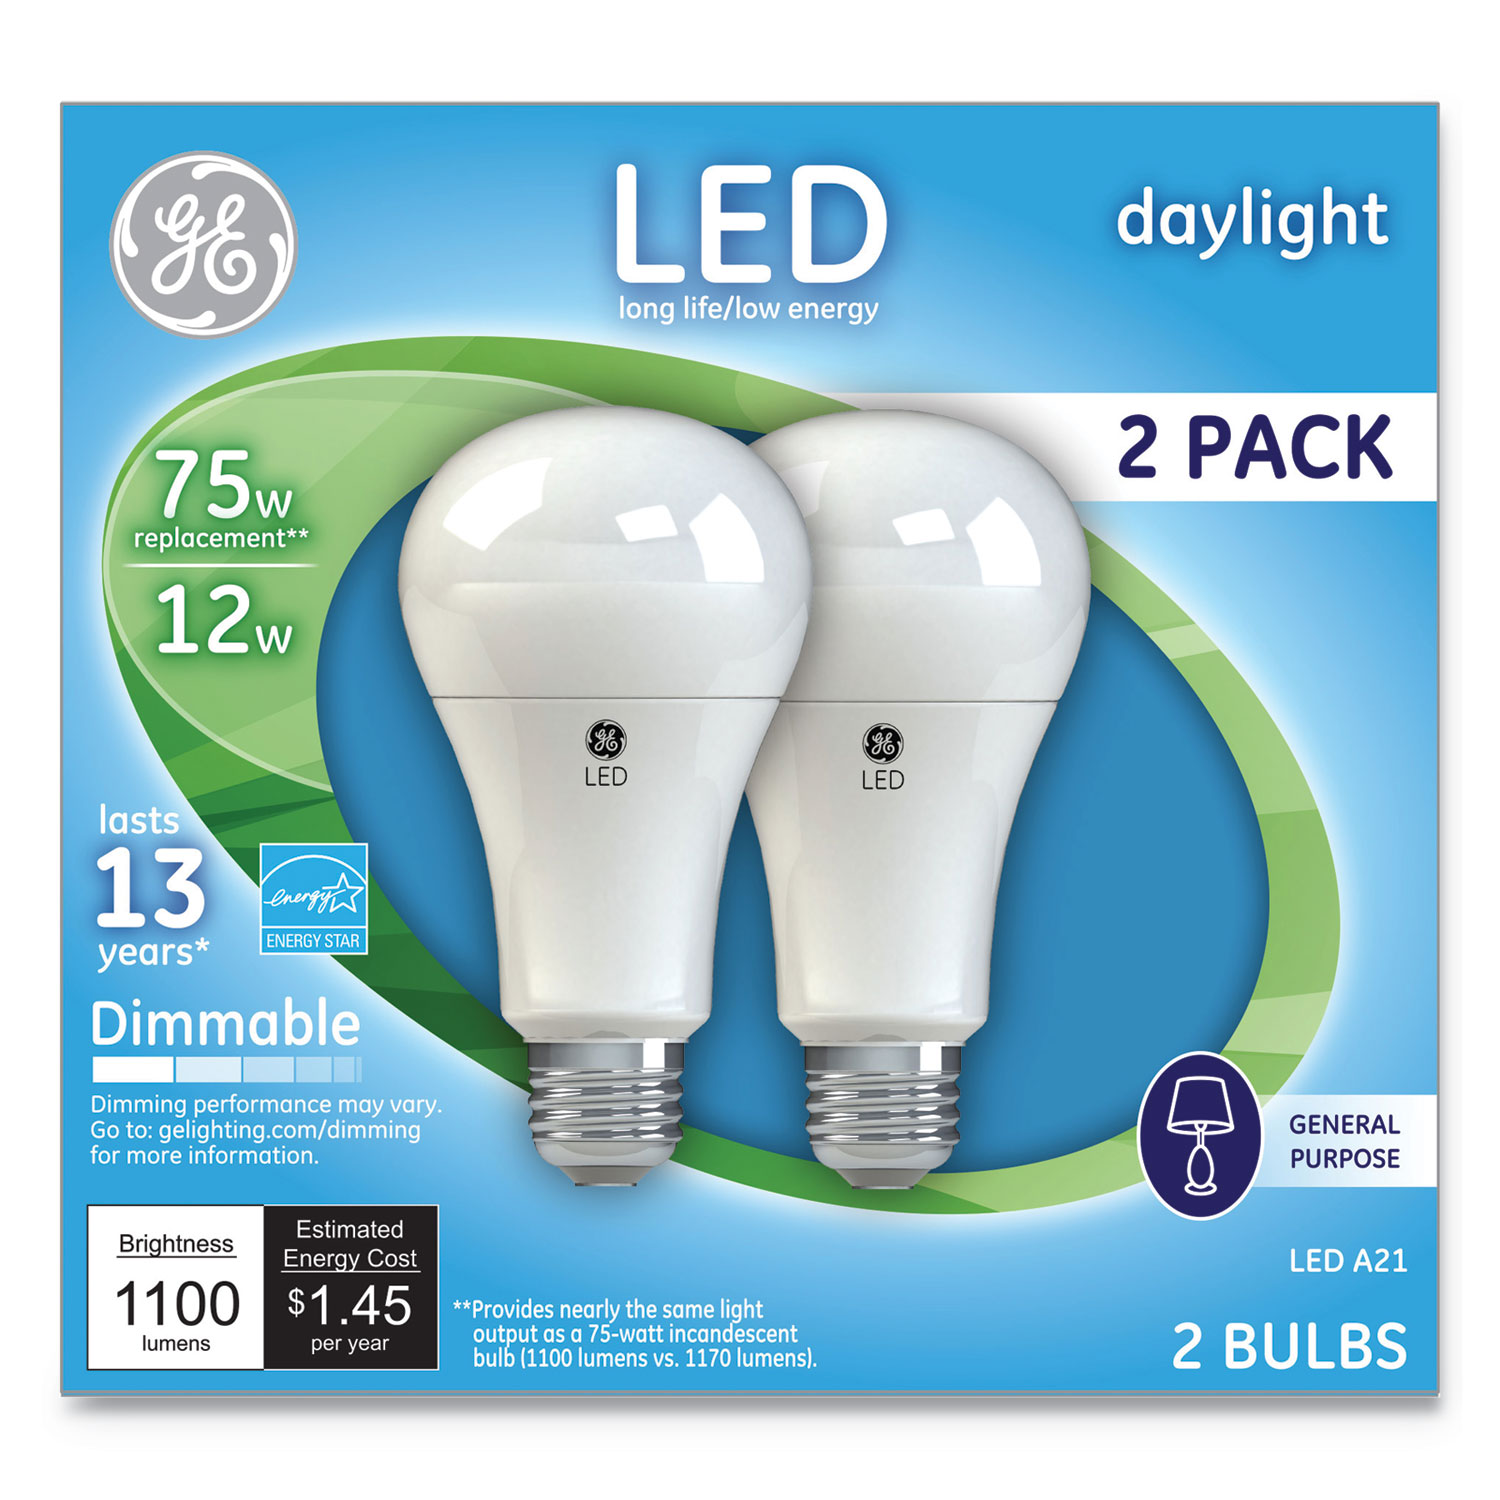 LED Daylight A21 Dimmable Light Bulb 